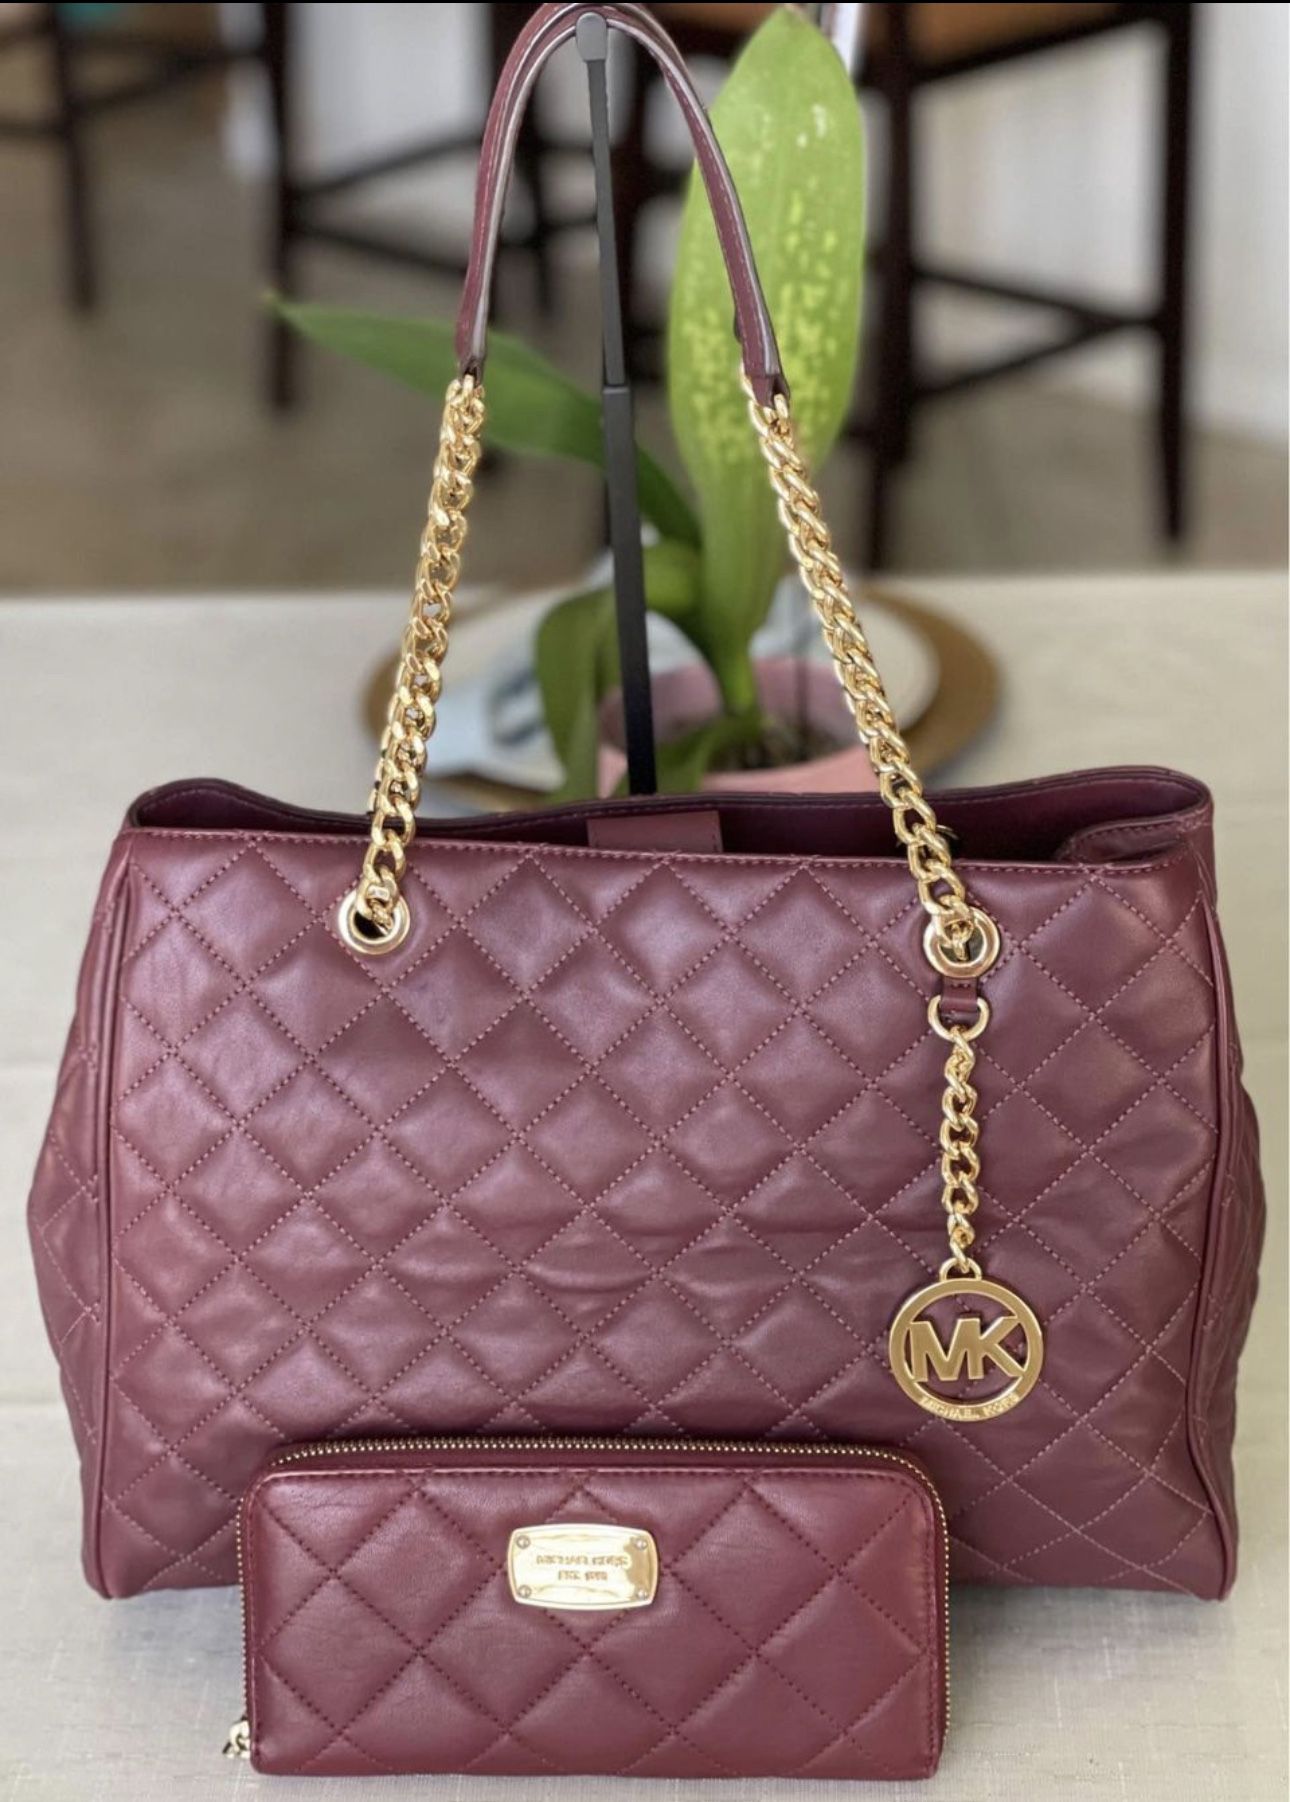 Louis Vuitton Authentic Handbag for Sale in Albuquerque, NM - OfferUp